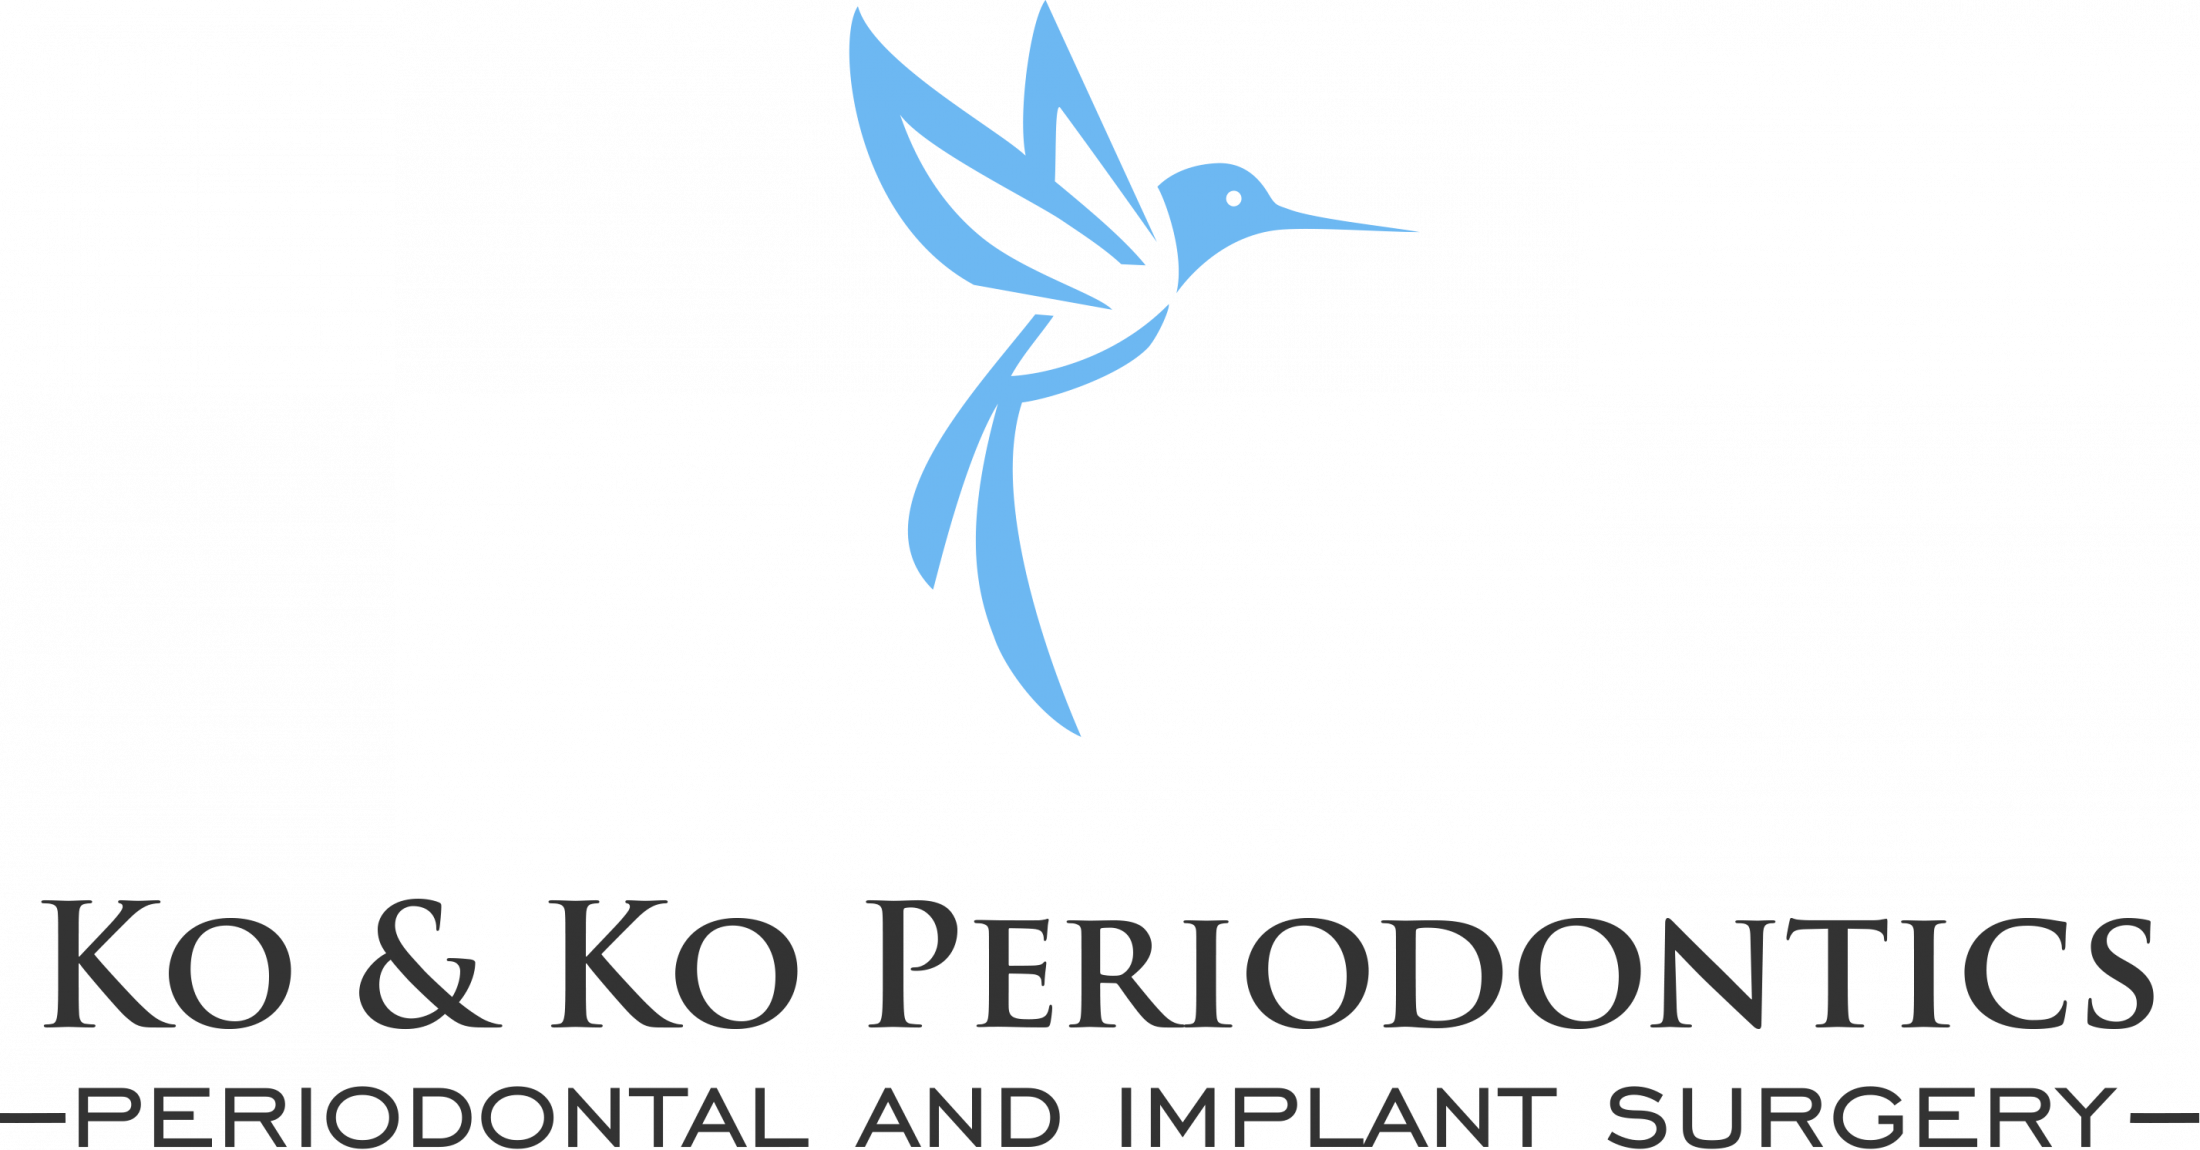 Link to Ko & Ko Periodontics home page